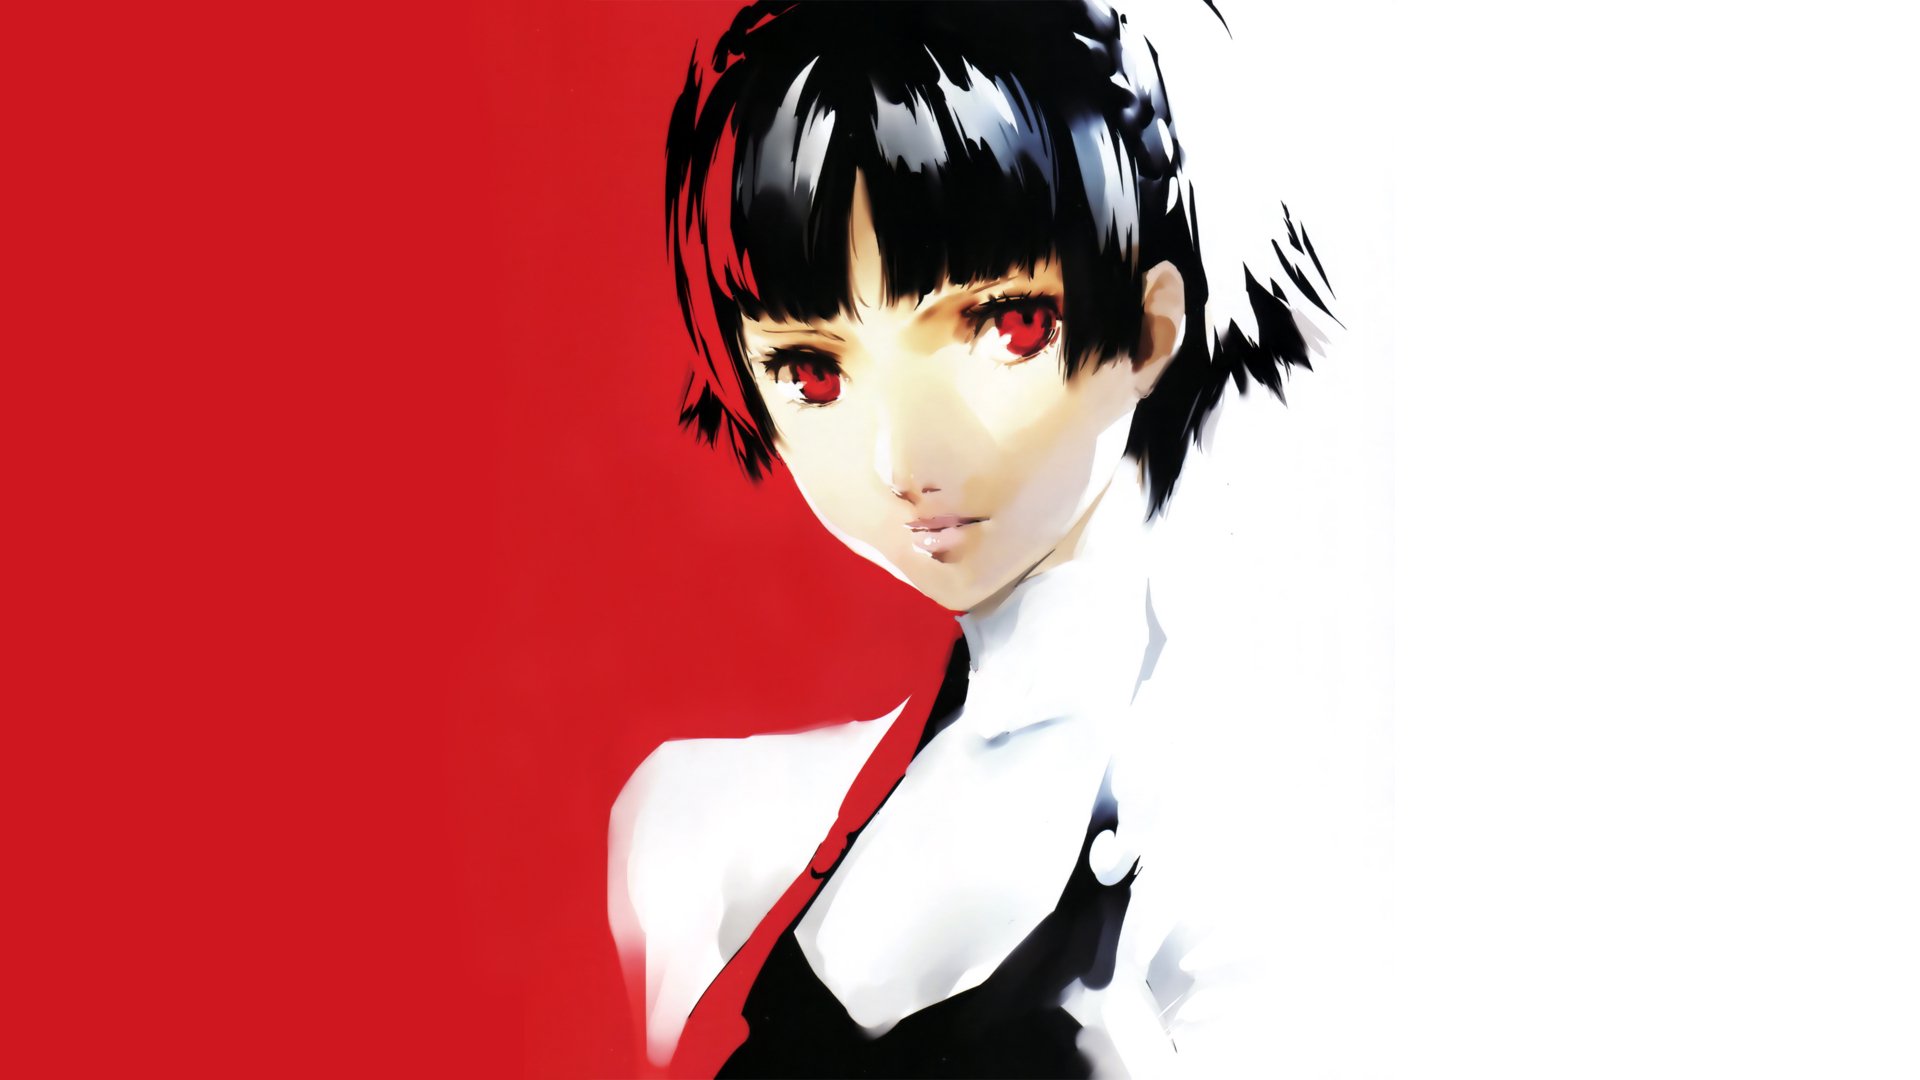 makoto wallpaper,haar,schwarzes haar,karikatur,anime,frisur